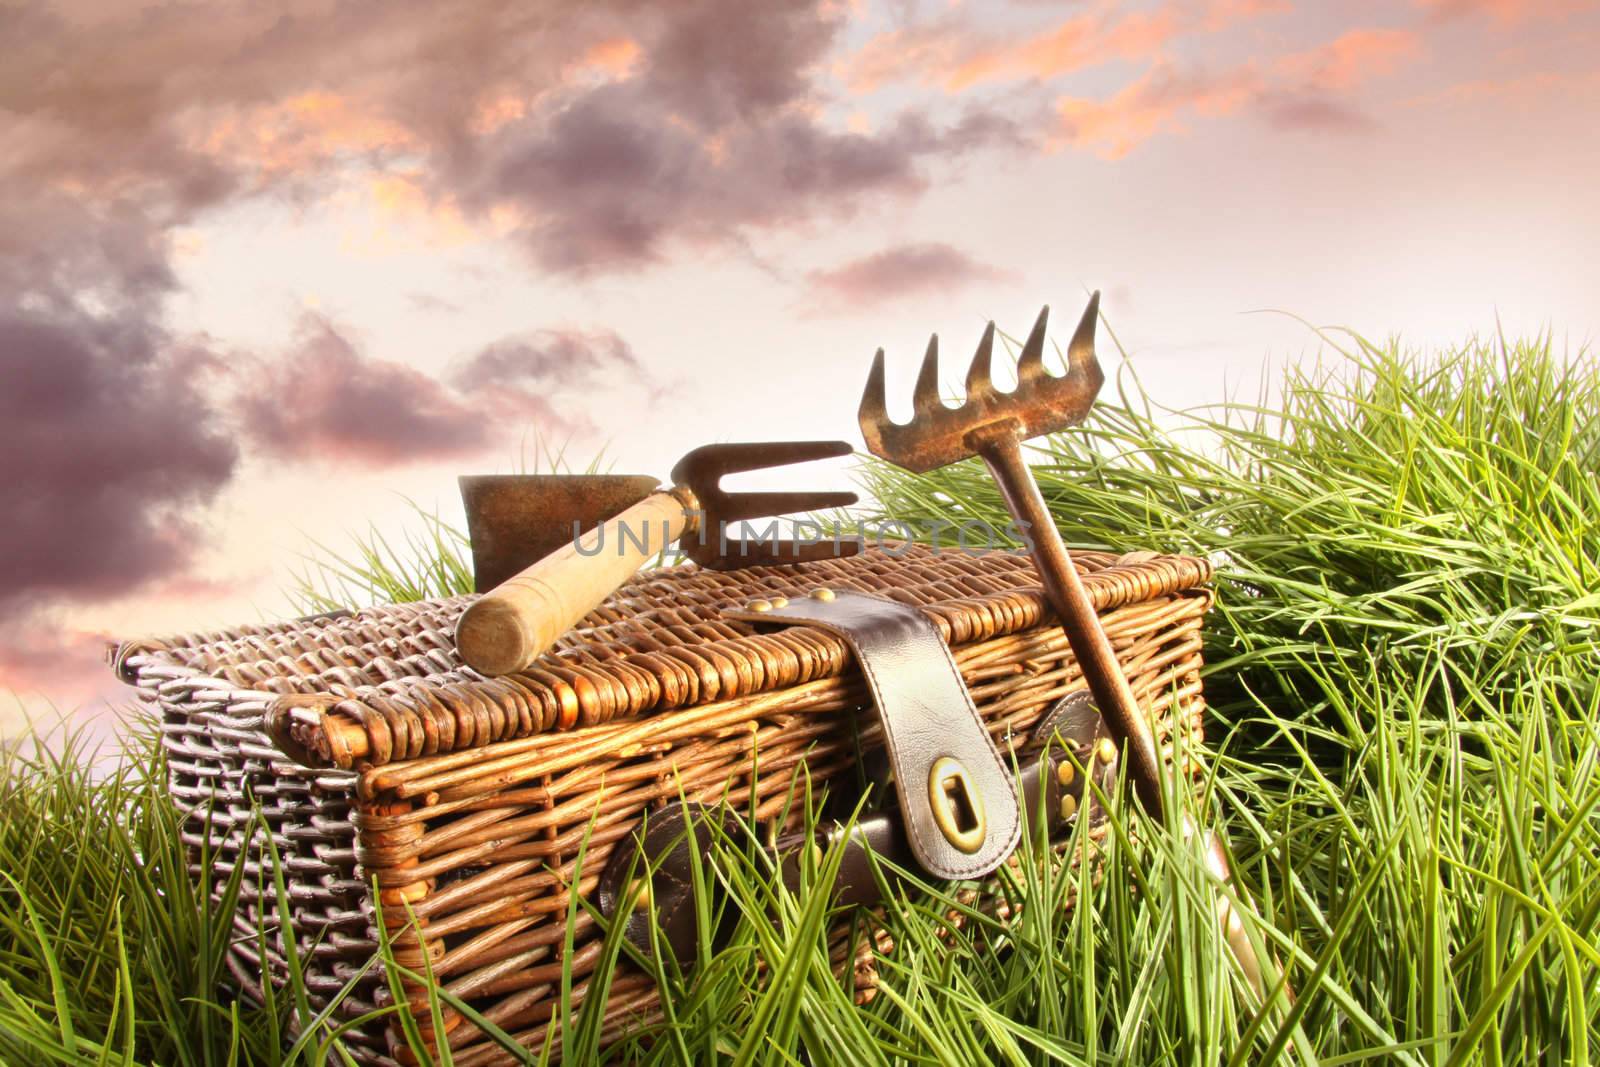 Wicker basket with garden tools in grass